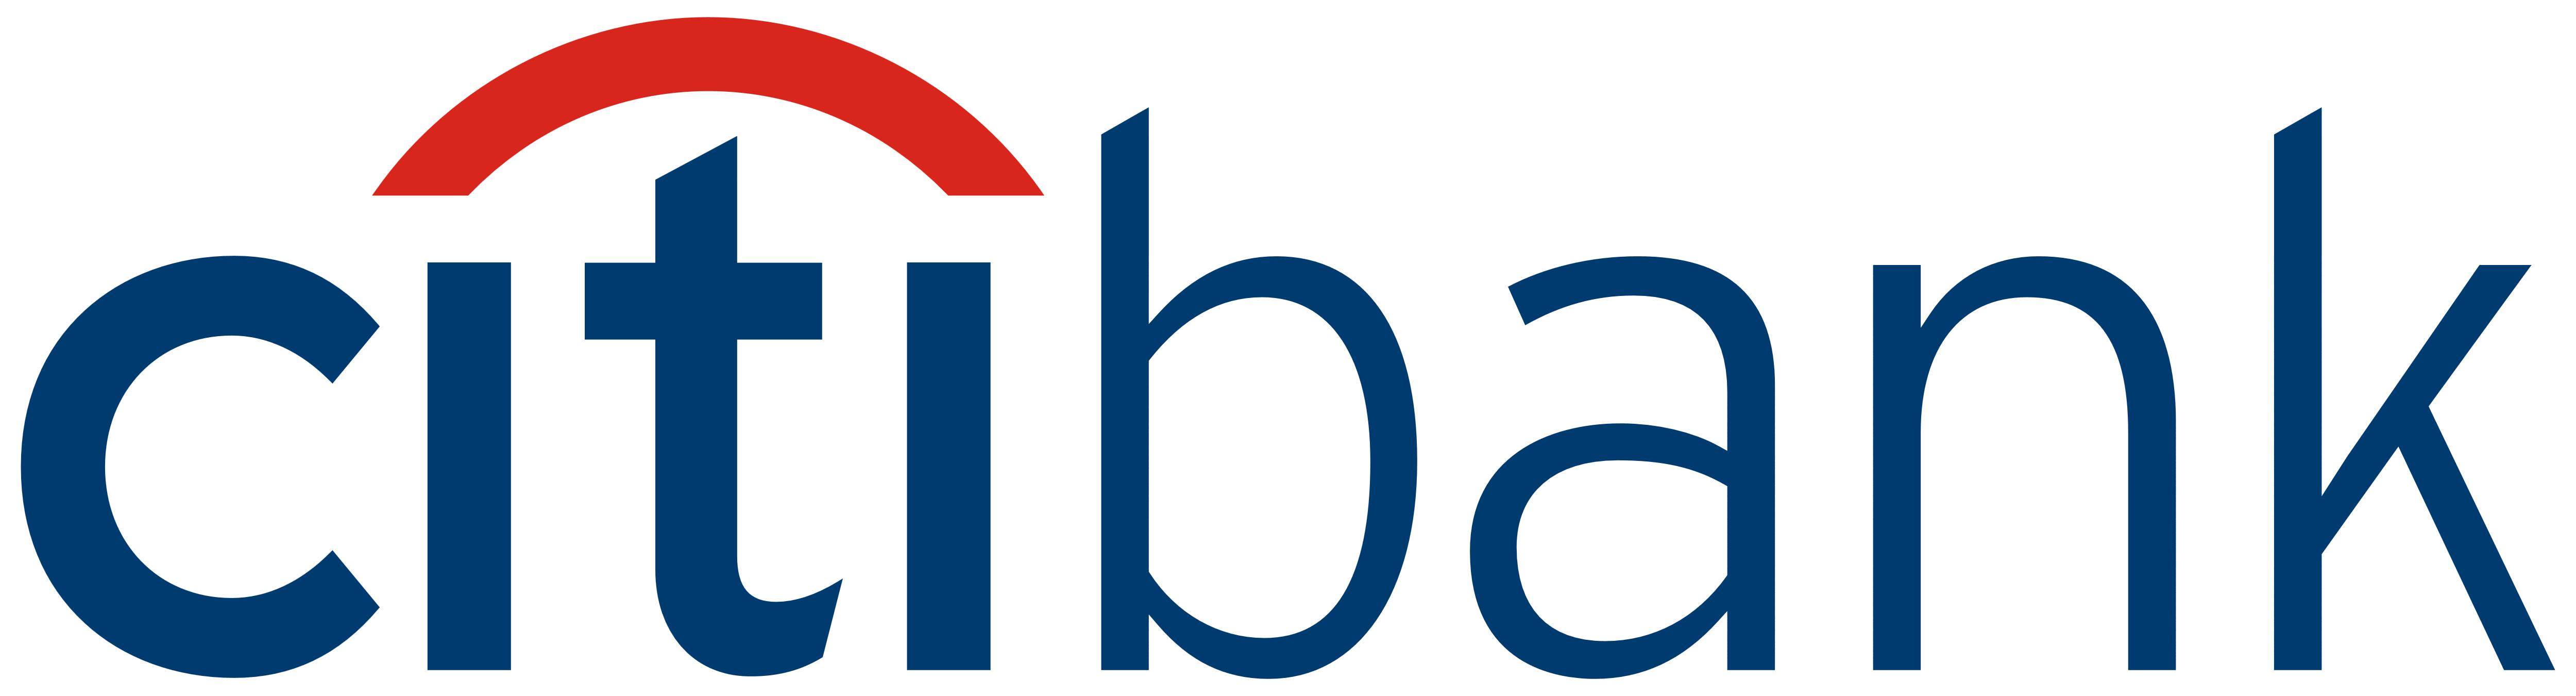 Image result for citibank logo